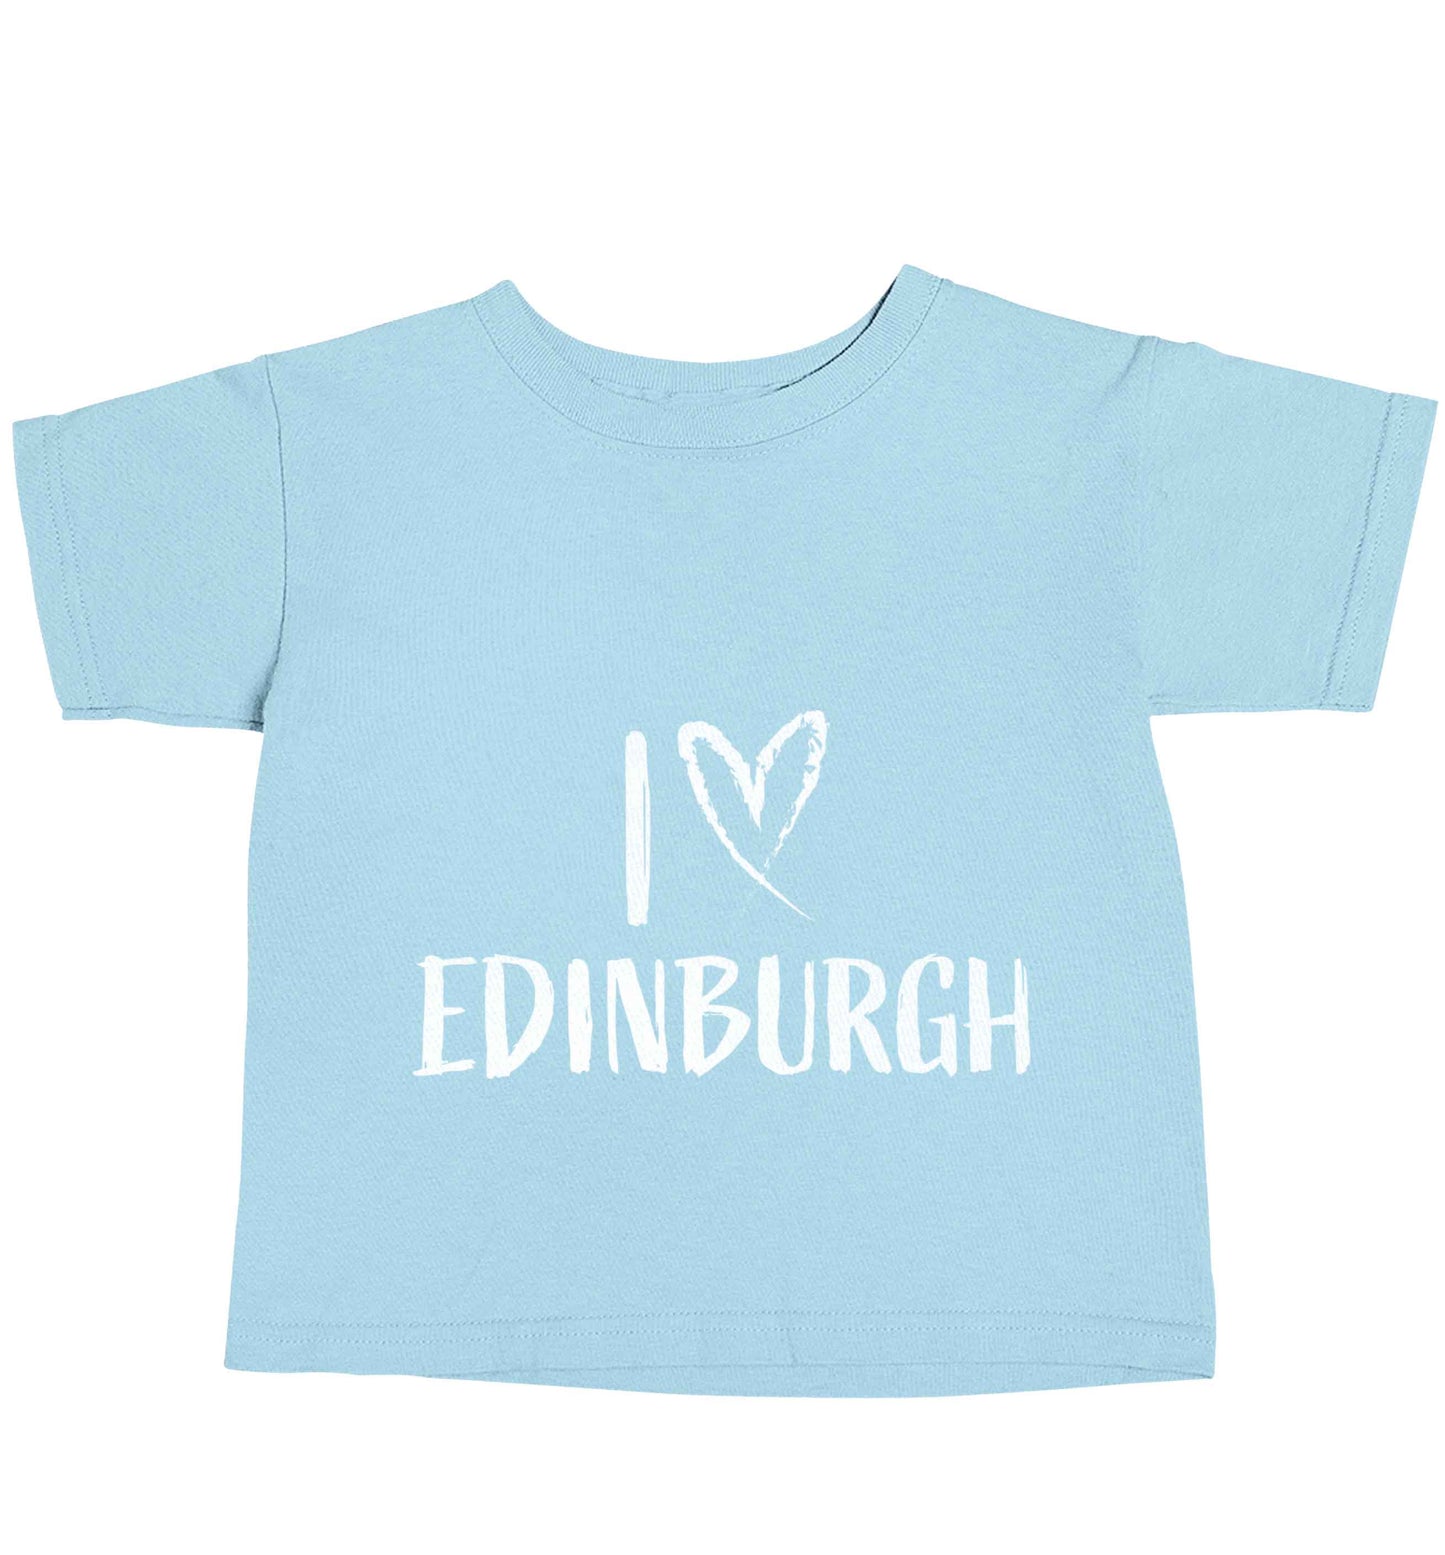 I love Edinburgh light blue baby toddler Tshirt 2 Years